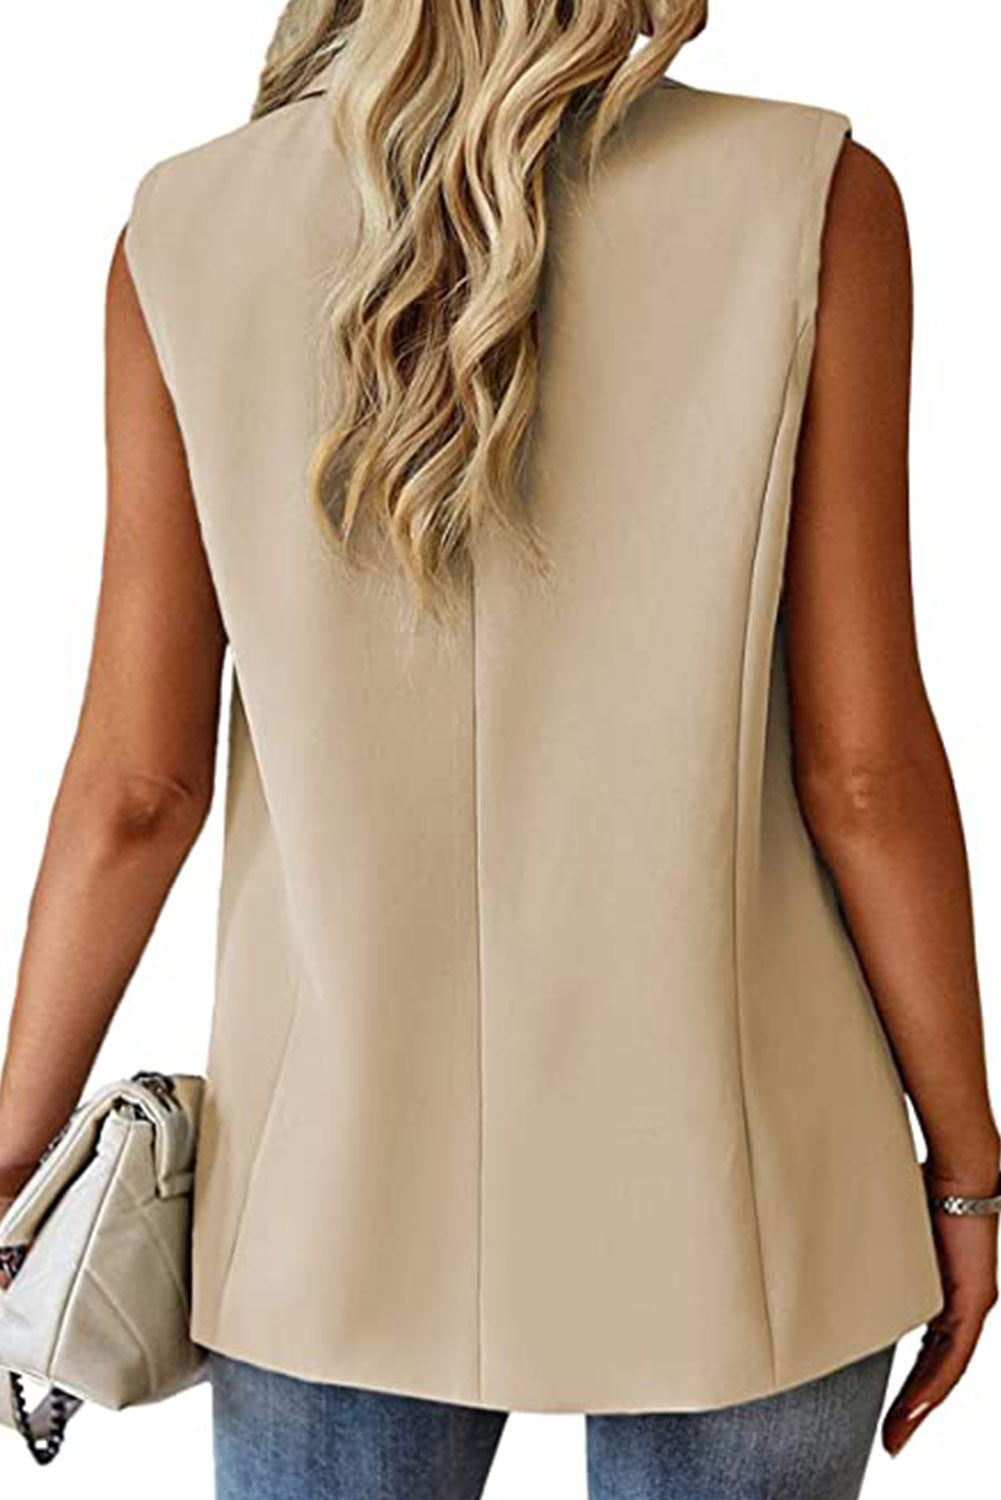 Apricot Single Button Pocketed Lapel Vest Blazer Outerwear JT's Designer Fashion